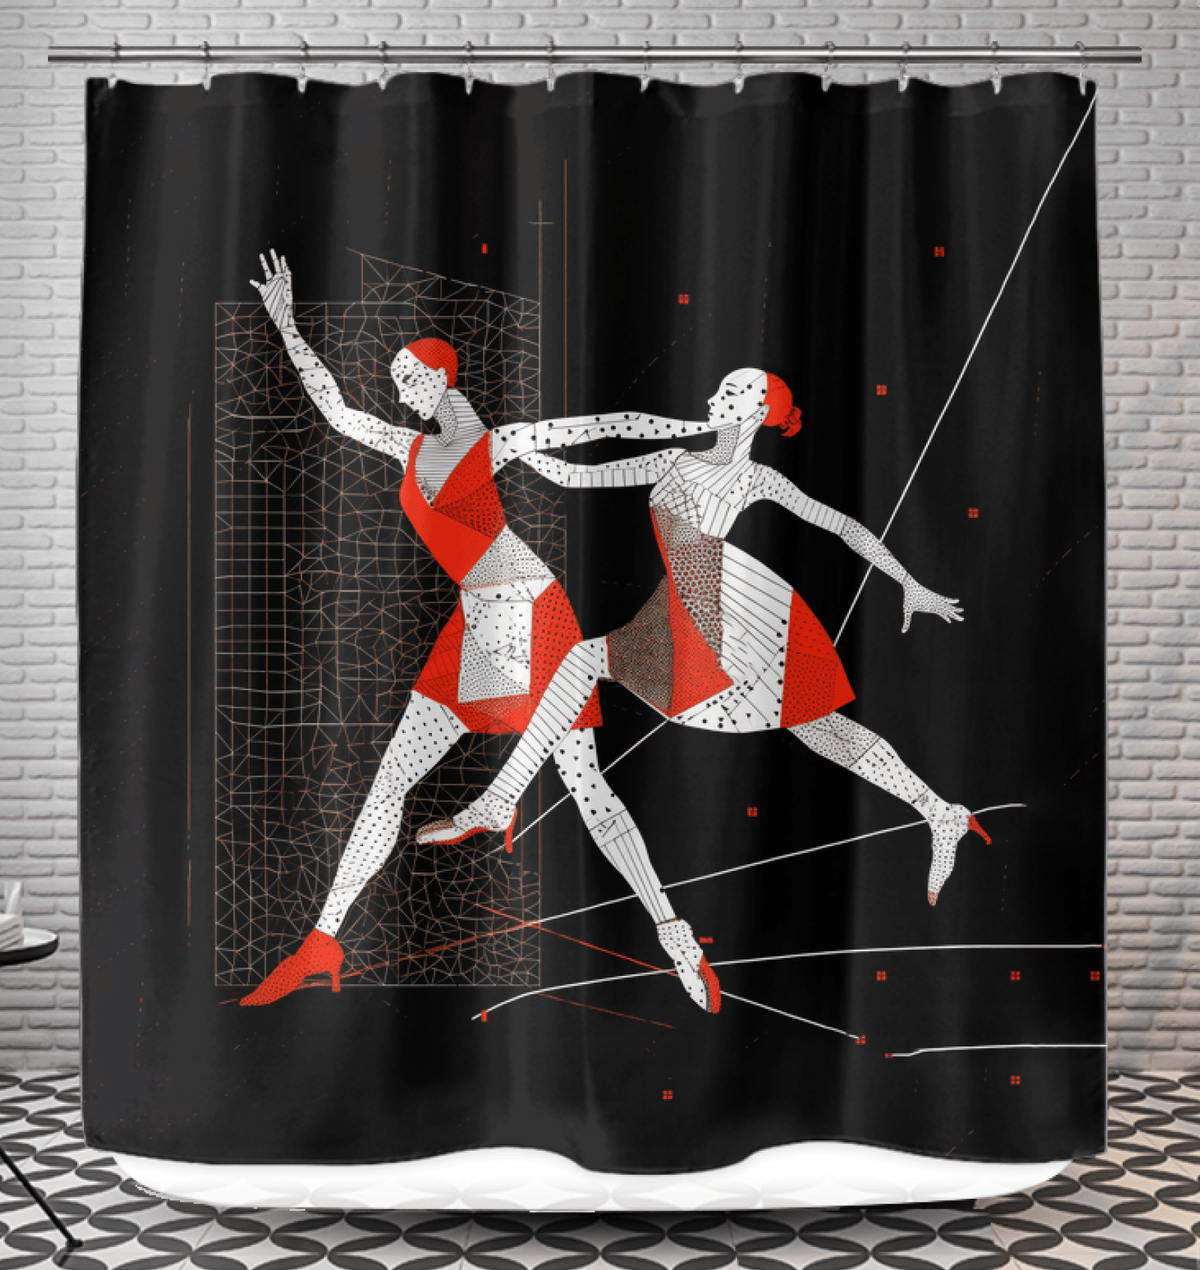 Artistic shower curtain featuring a graceful dance posture design